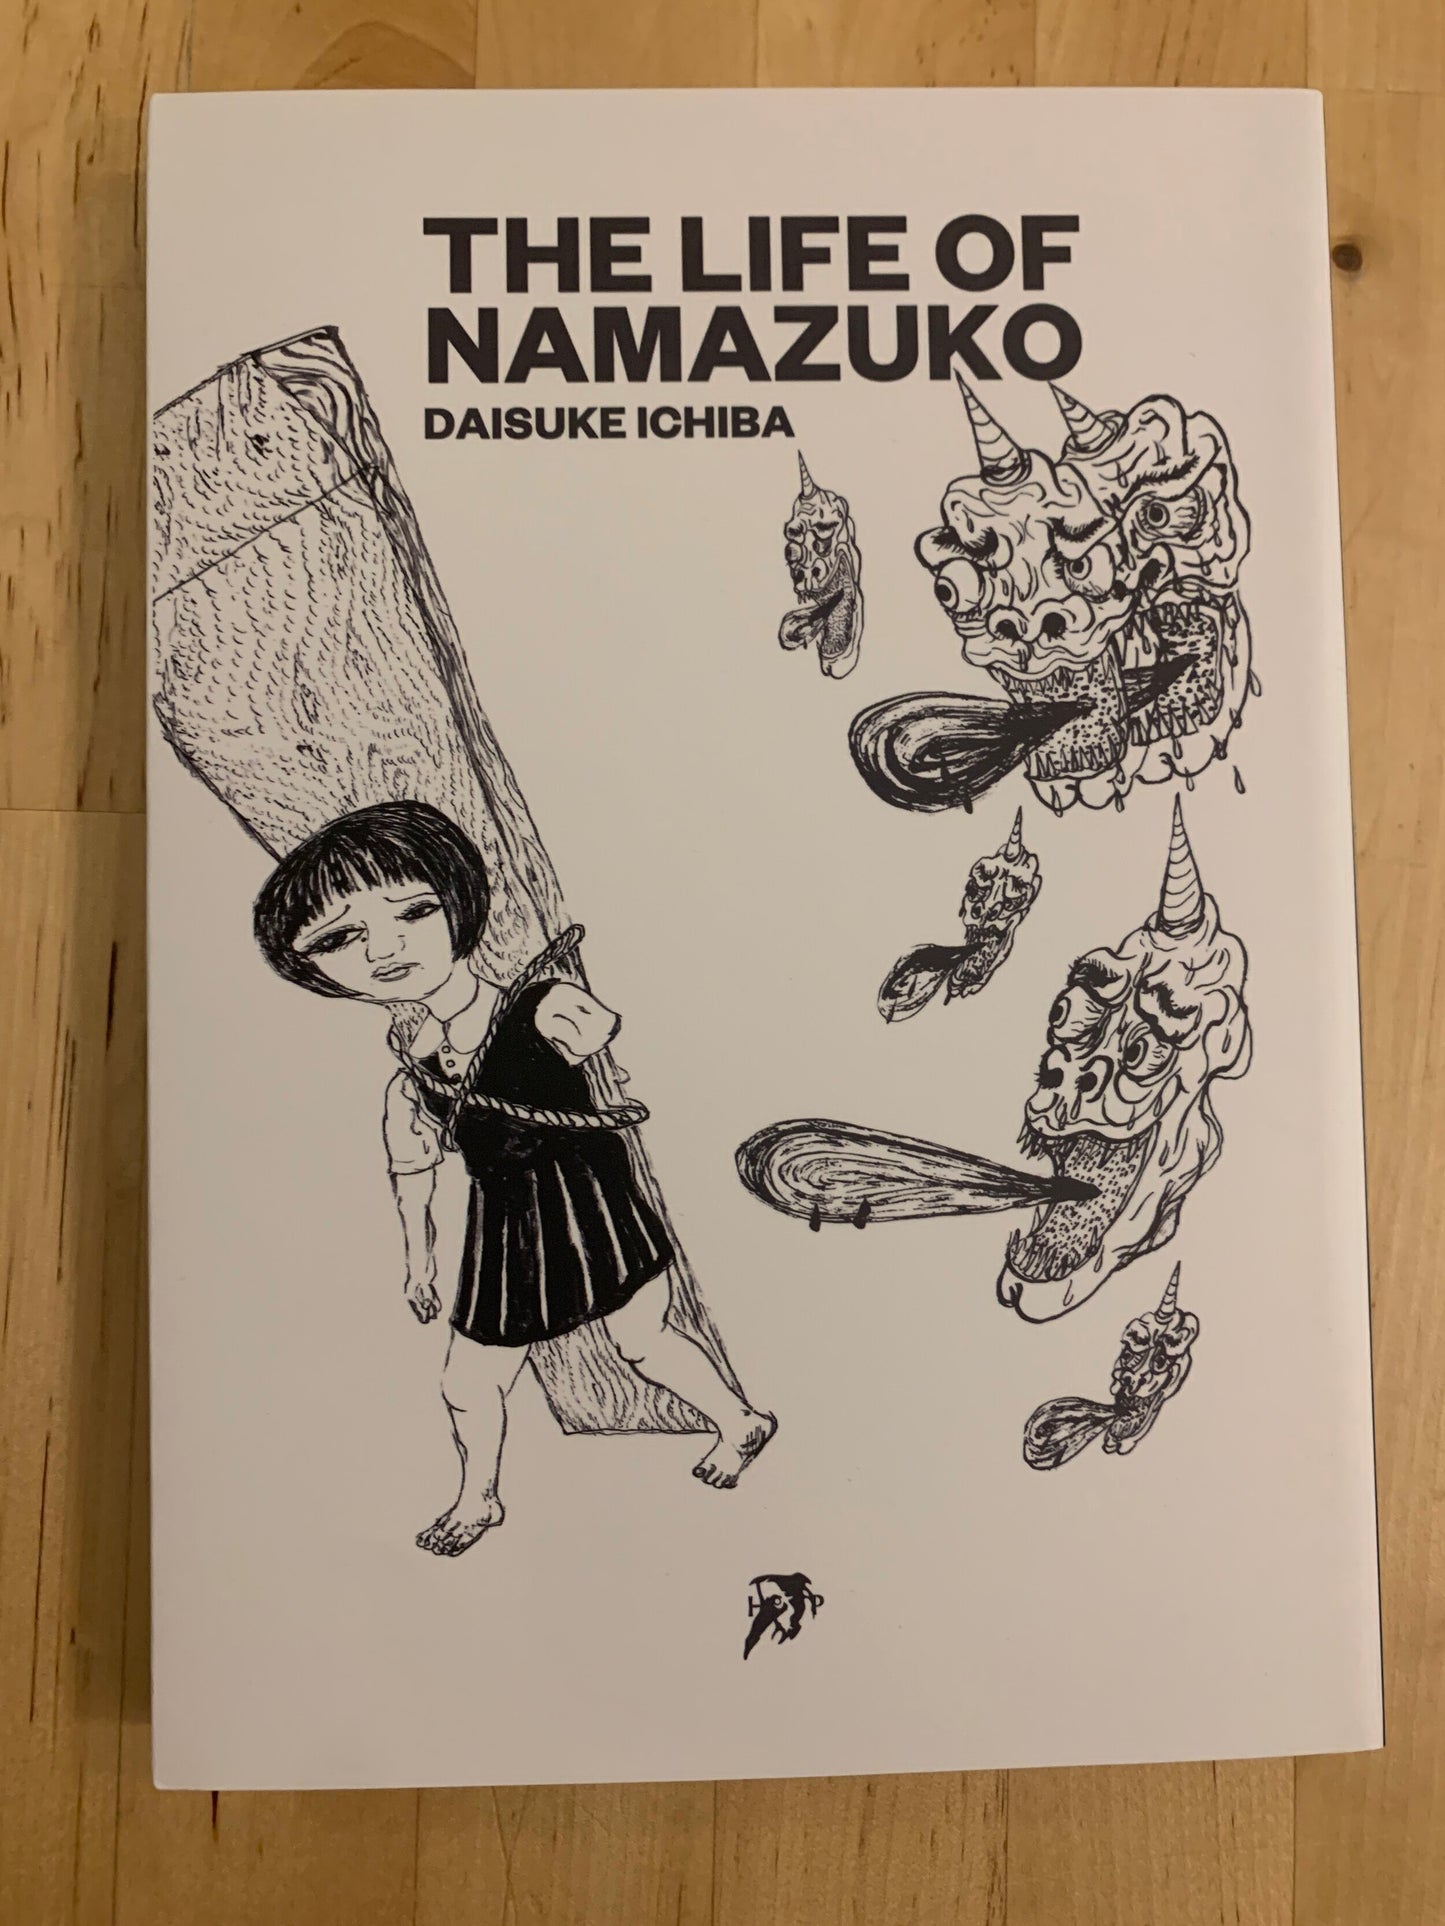 The Life of Namazuko